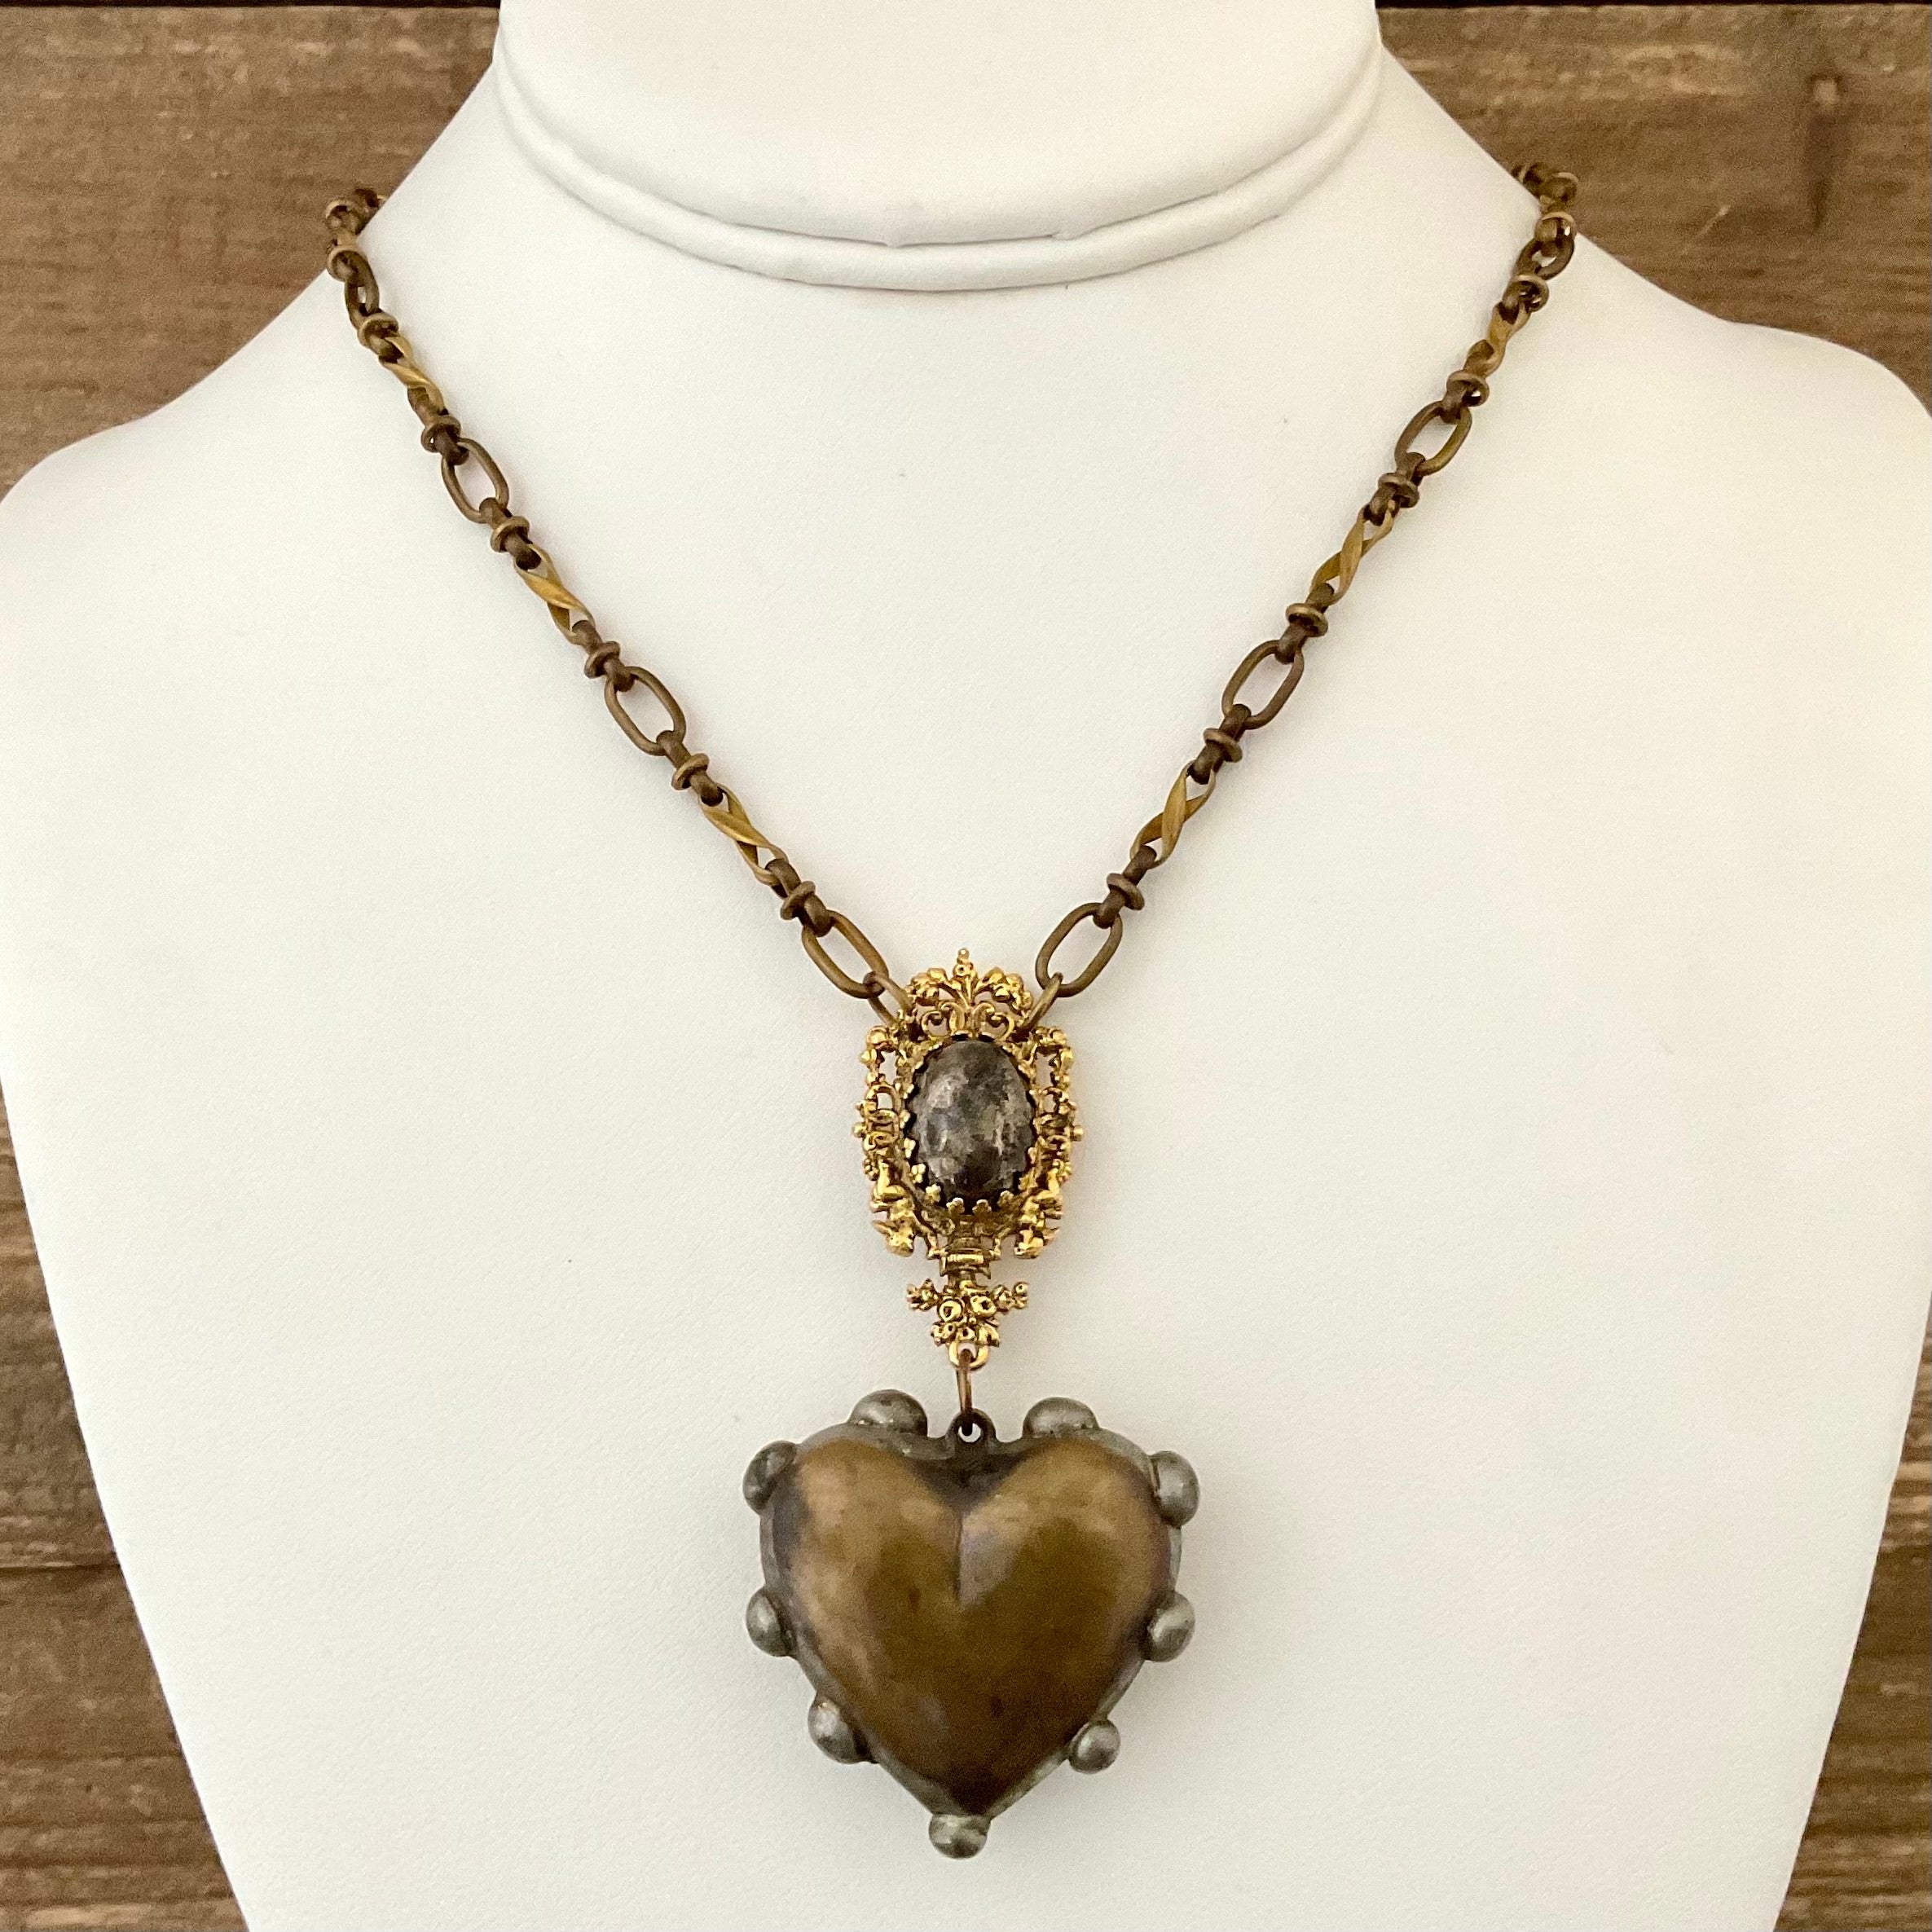 Vintage Chain with Vintage Hematite Pin & Vintage Soldered Heart Pendant 16"